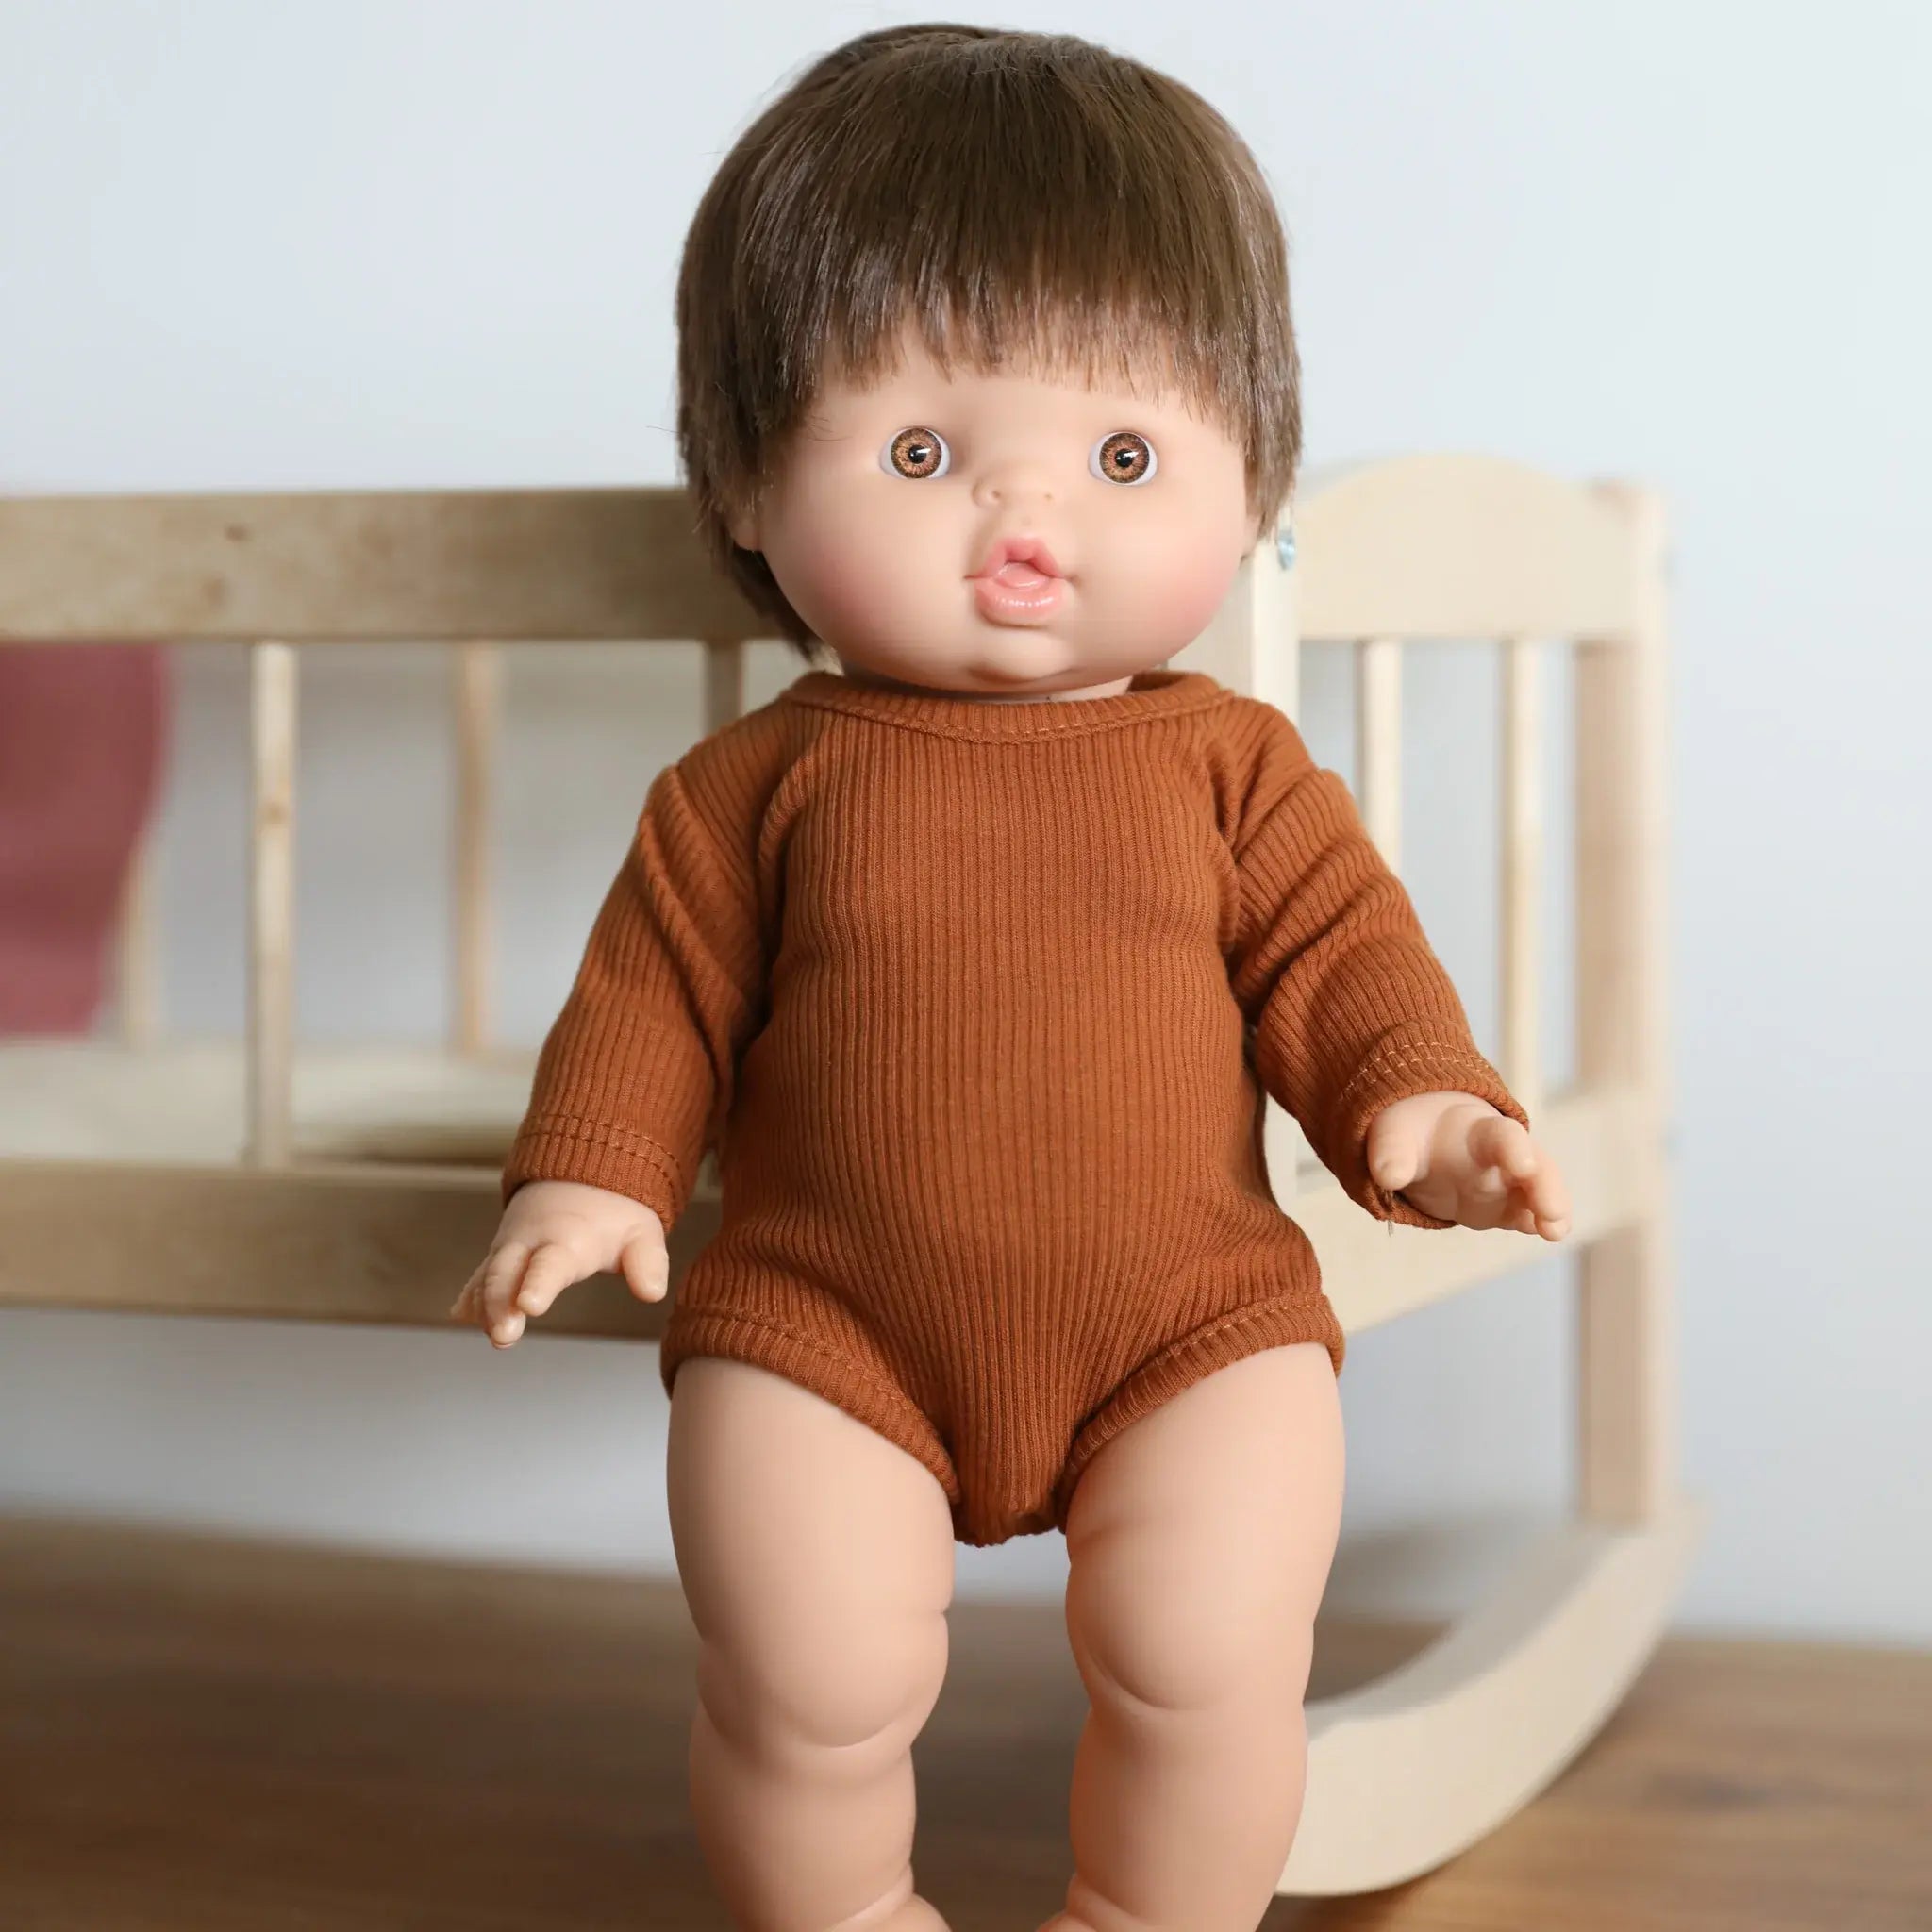 Jules European Boy Baby Doll with Light Brown Eyes  Minikane   